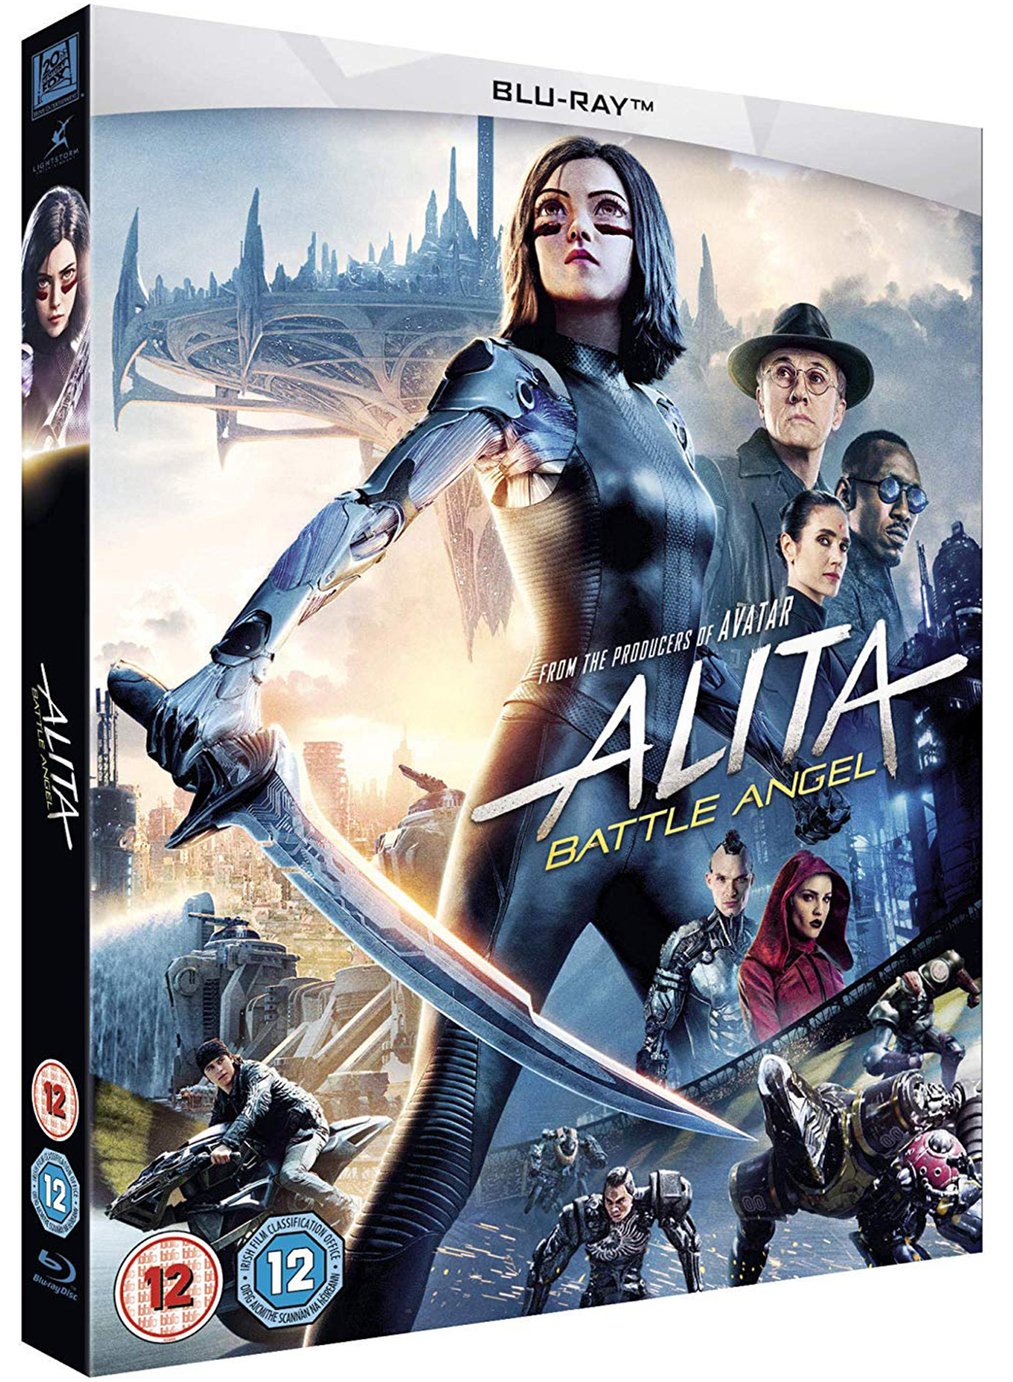 Alita: Battle Angel Blu-Ray Review